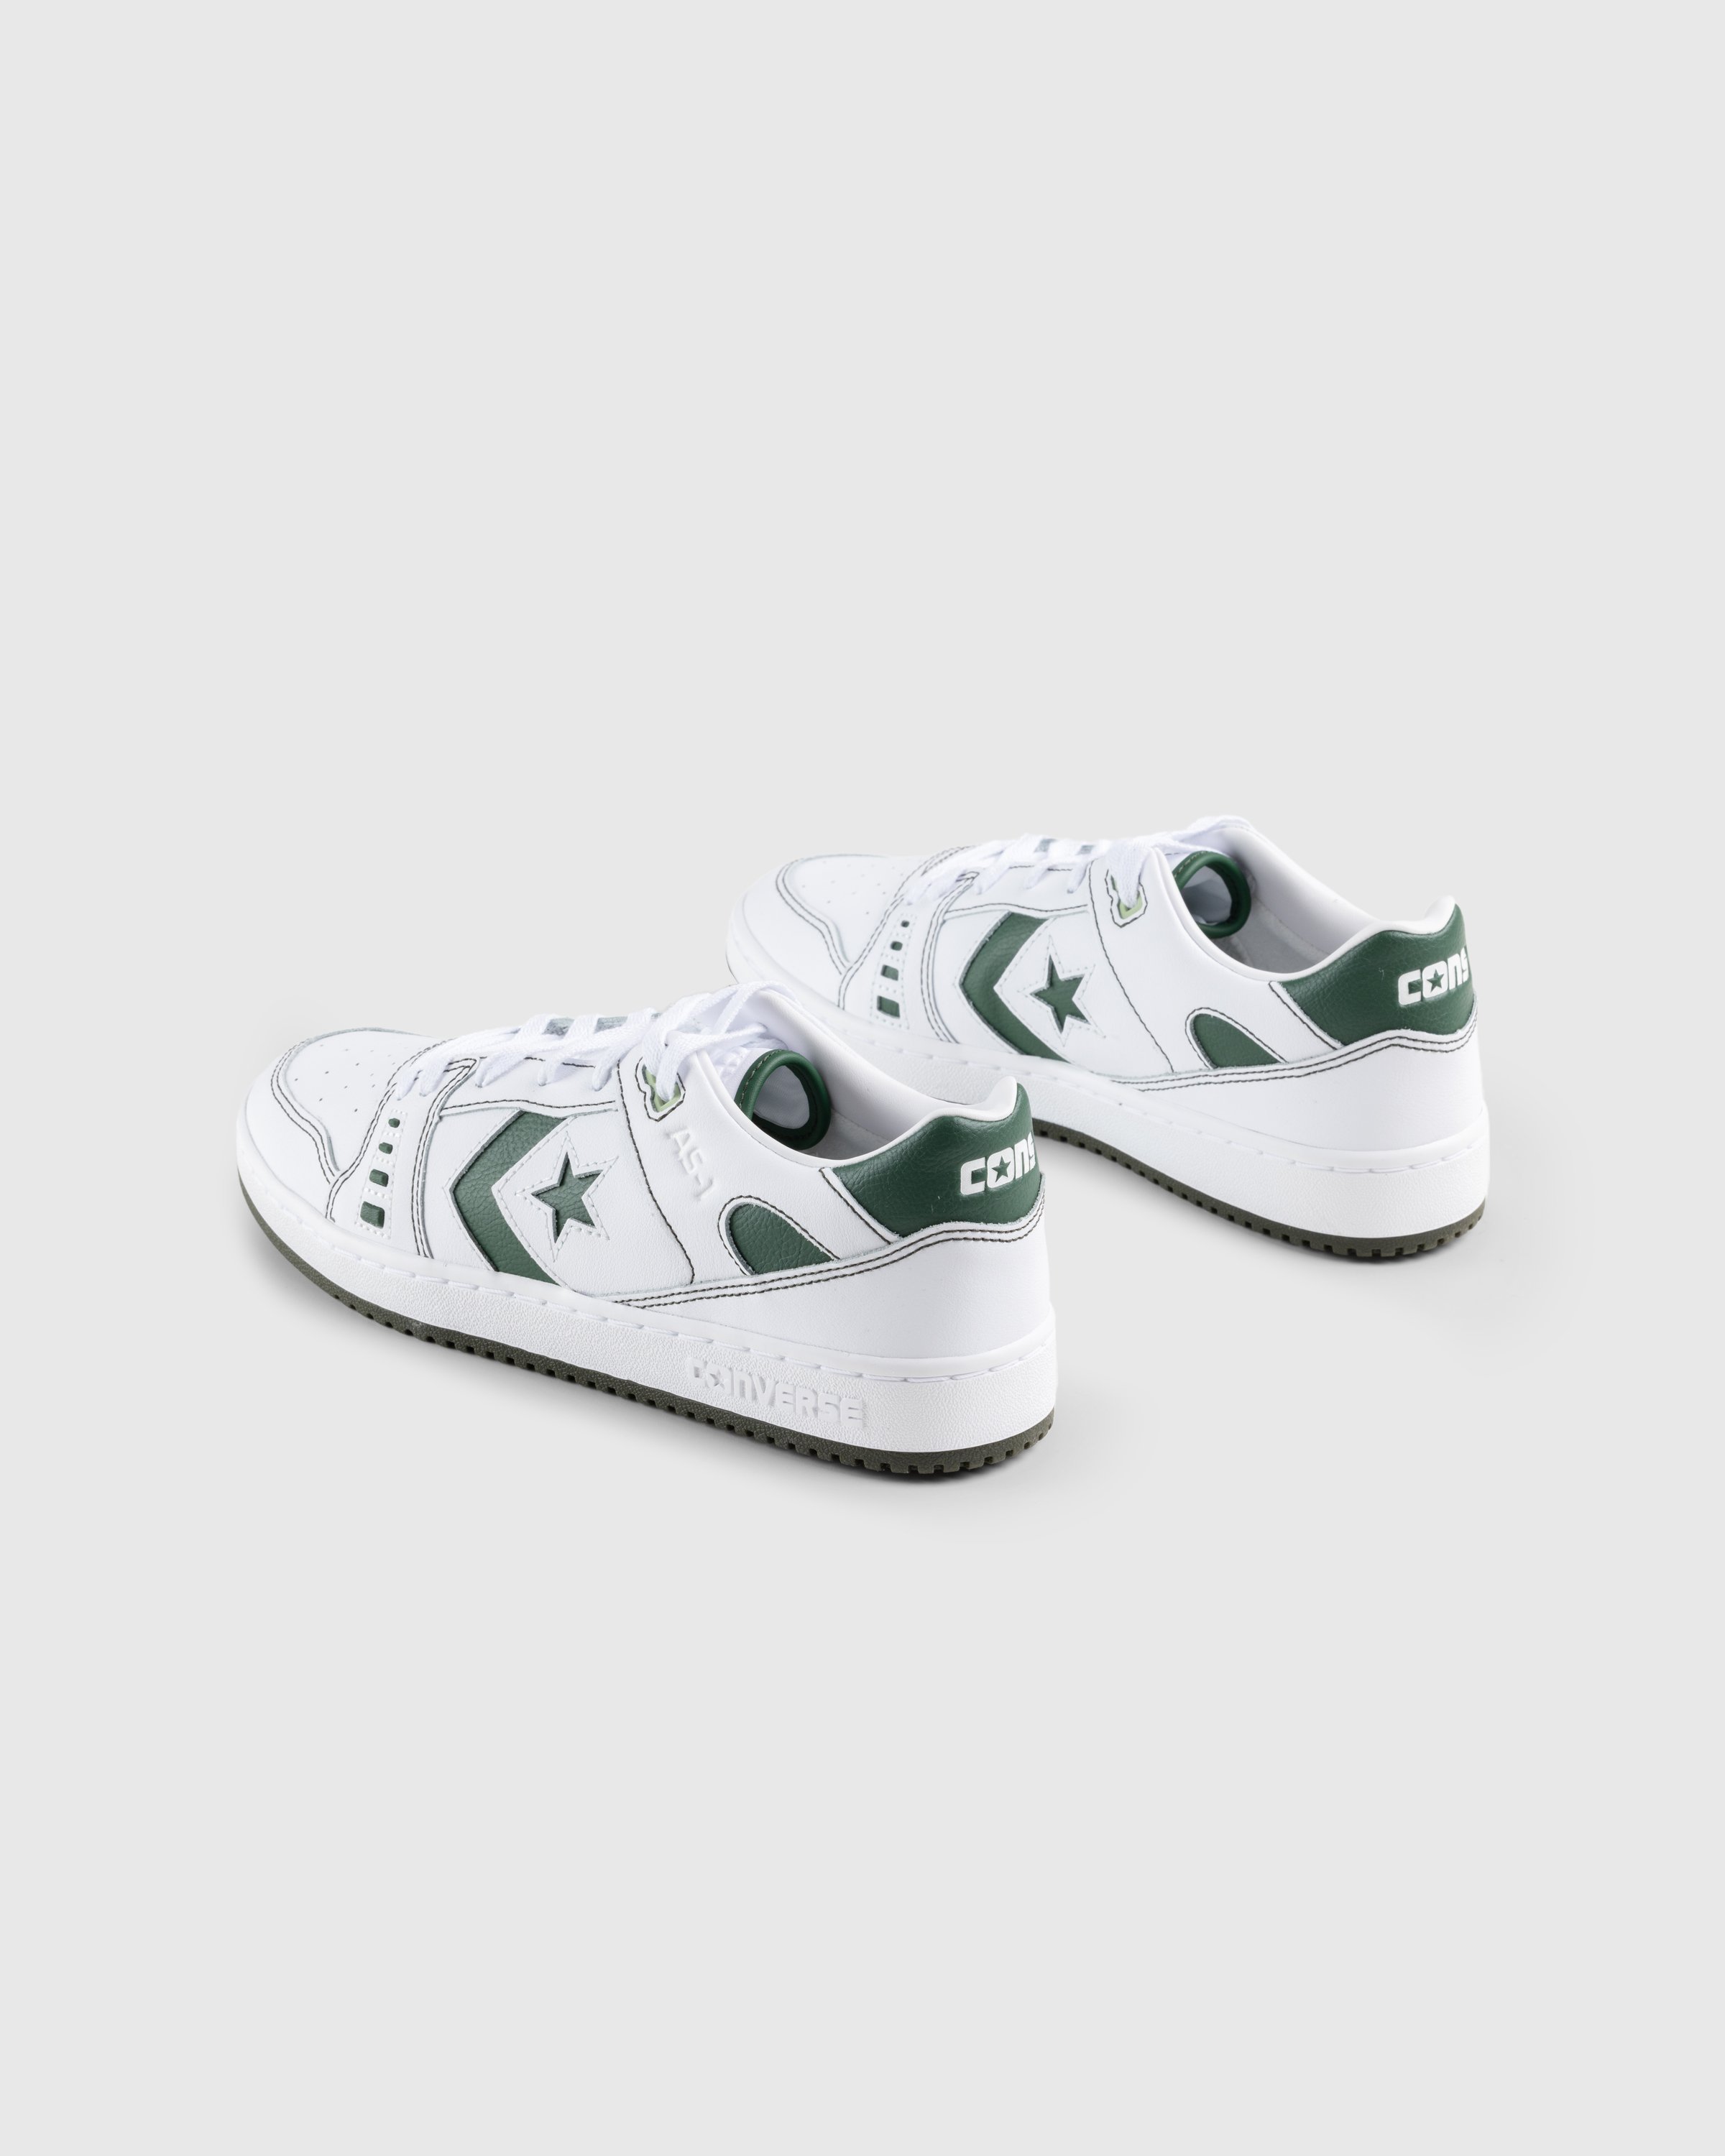 Converse - AS-1 Pro Ox White/Fir/White - Footwear - White - Image 4